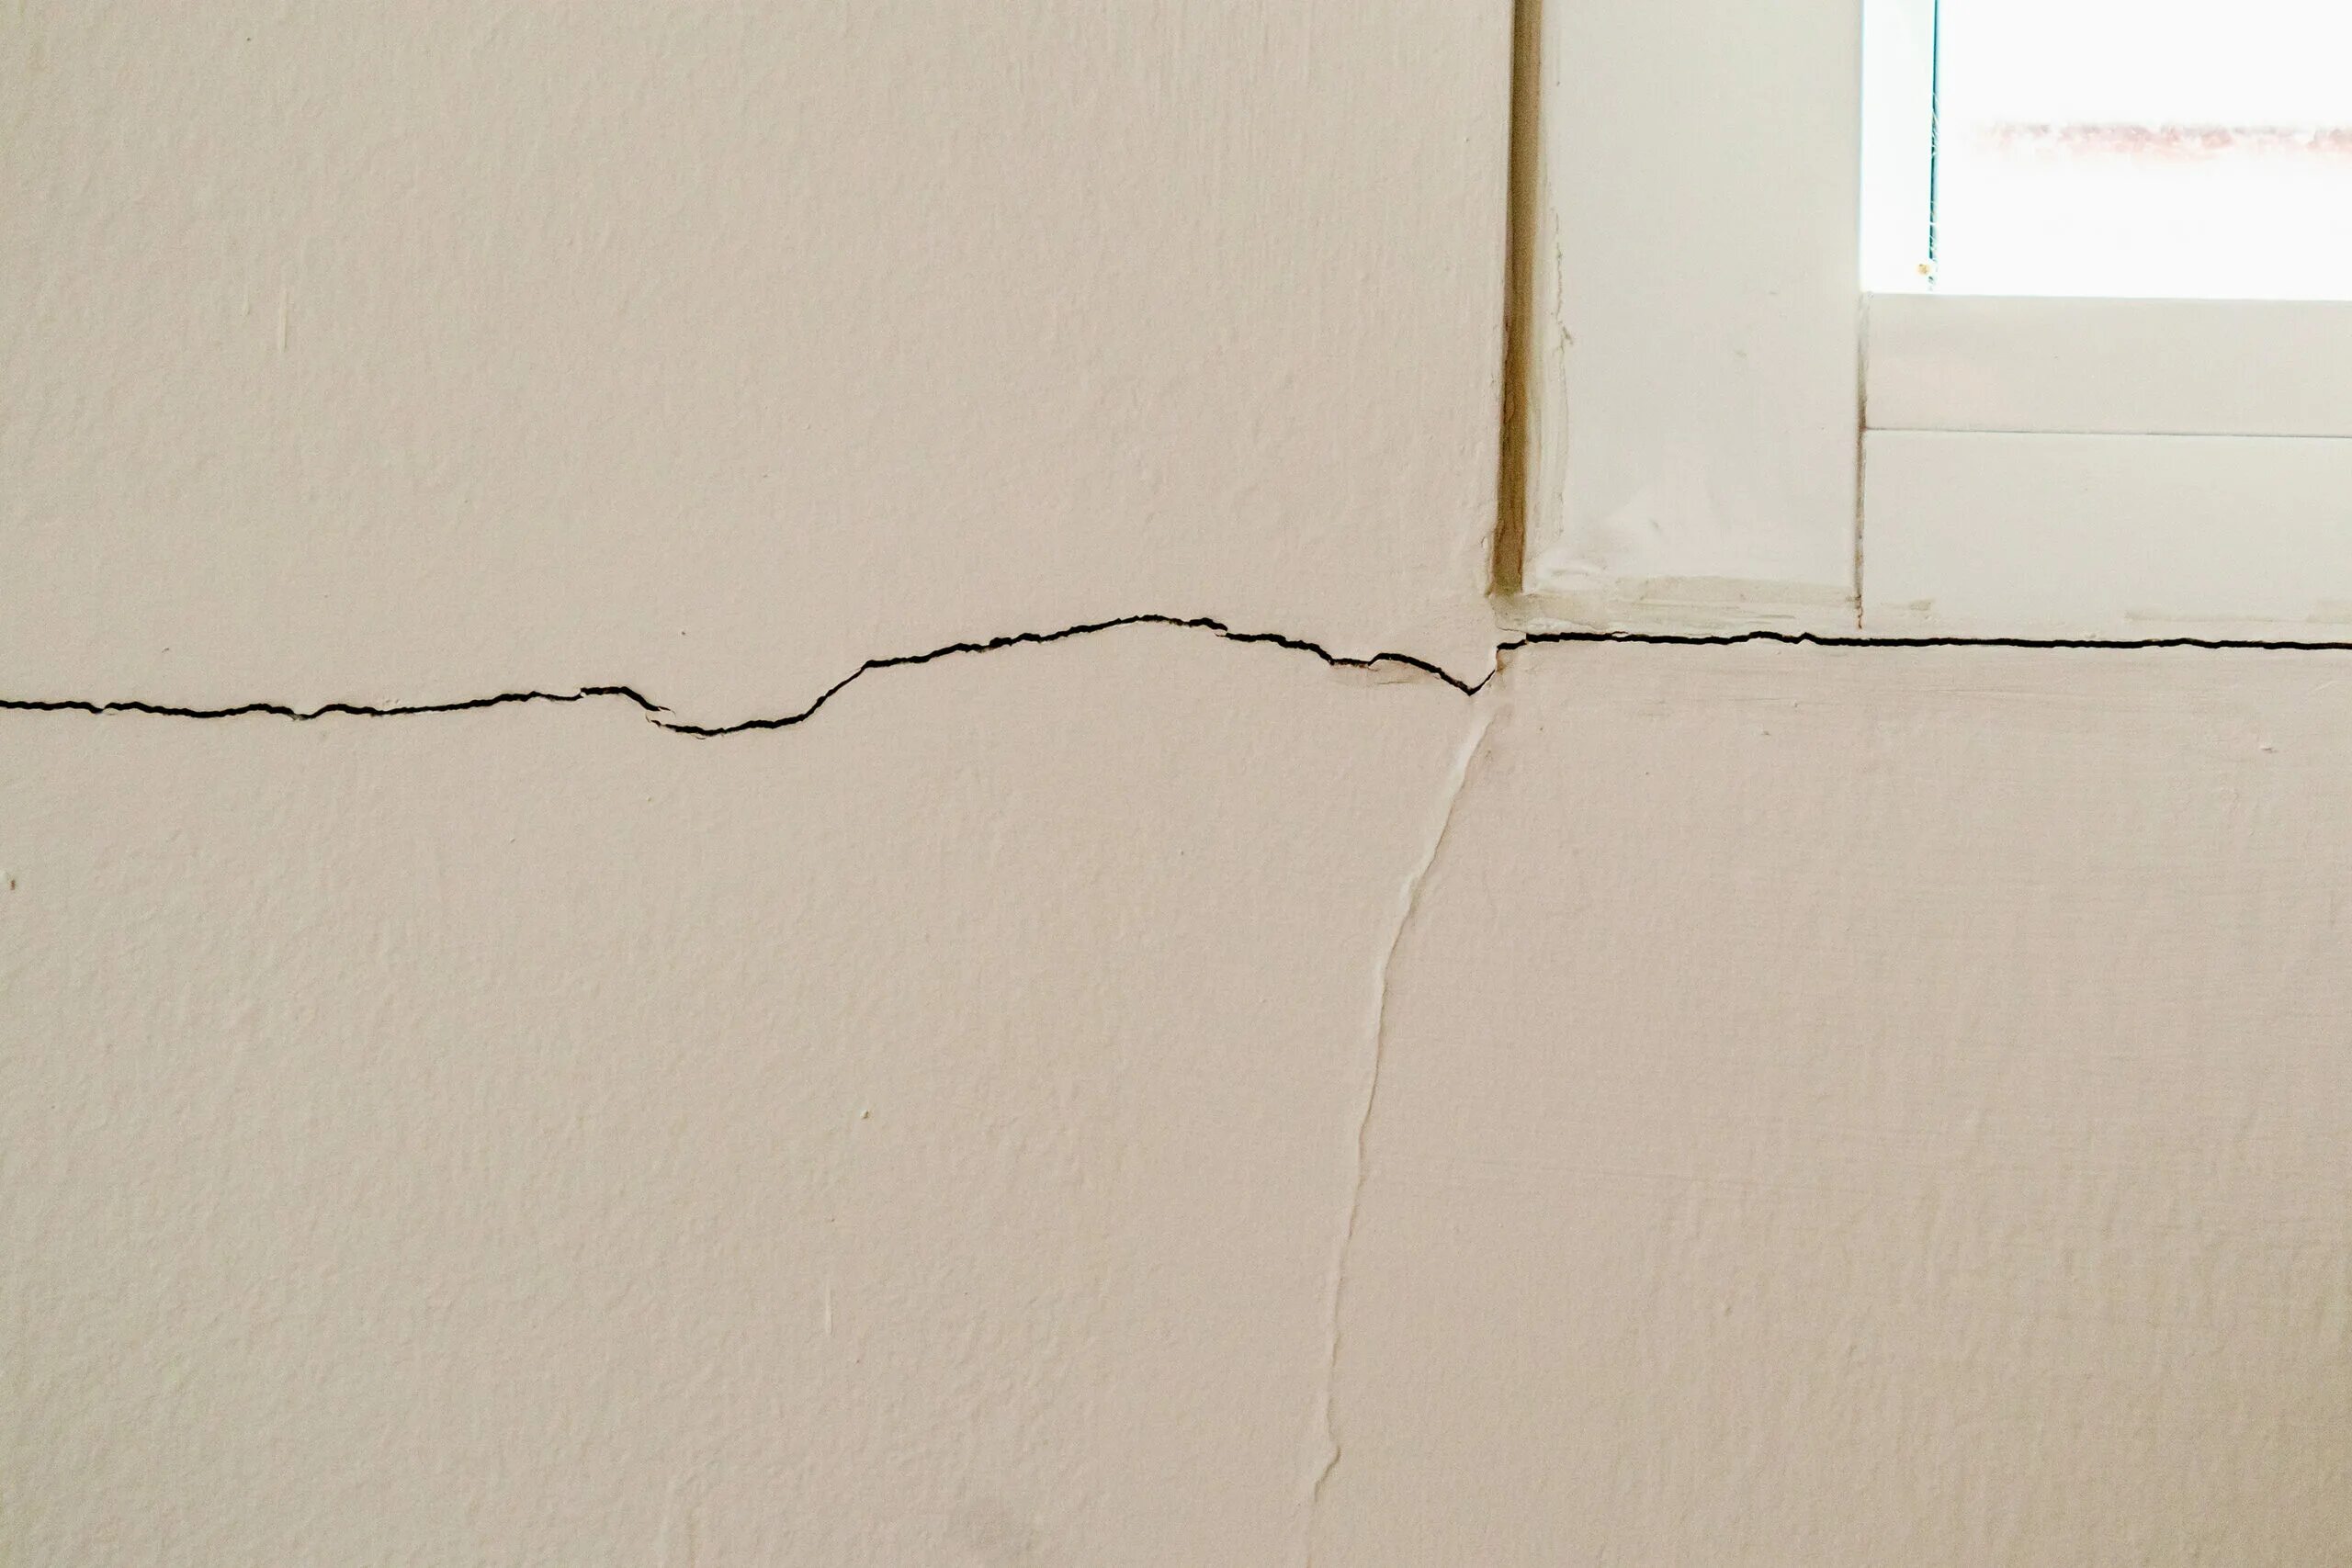 Сон трещина. Трещина в доме. Много трещин на стене. Трещины возле окон.